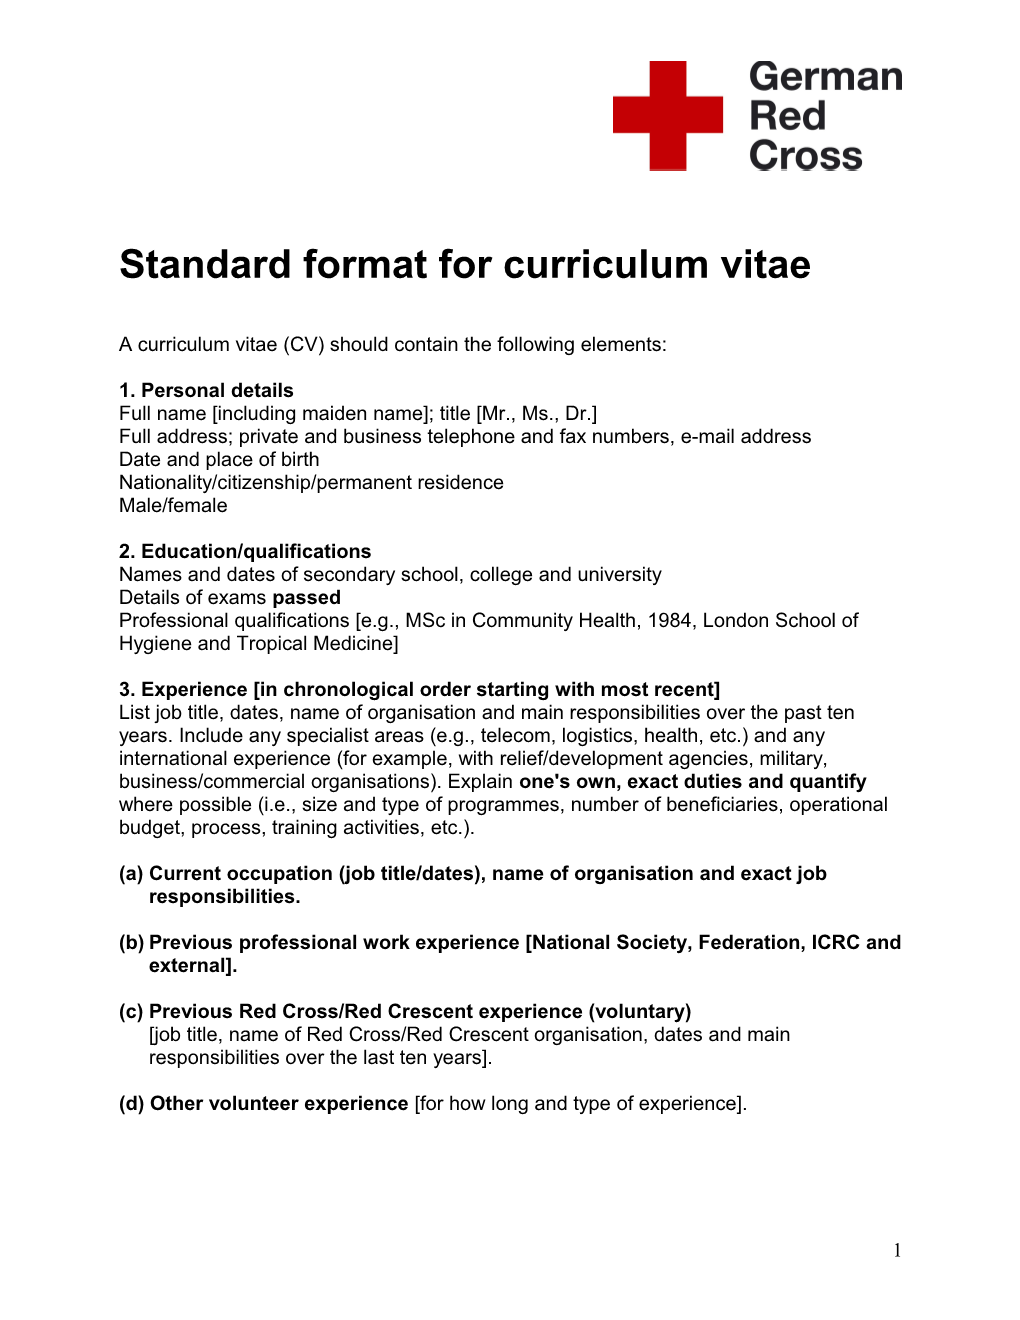 Standard Format for Curriculum Vitae